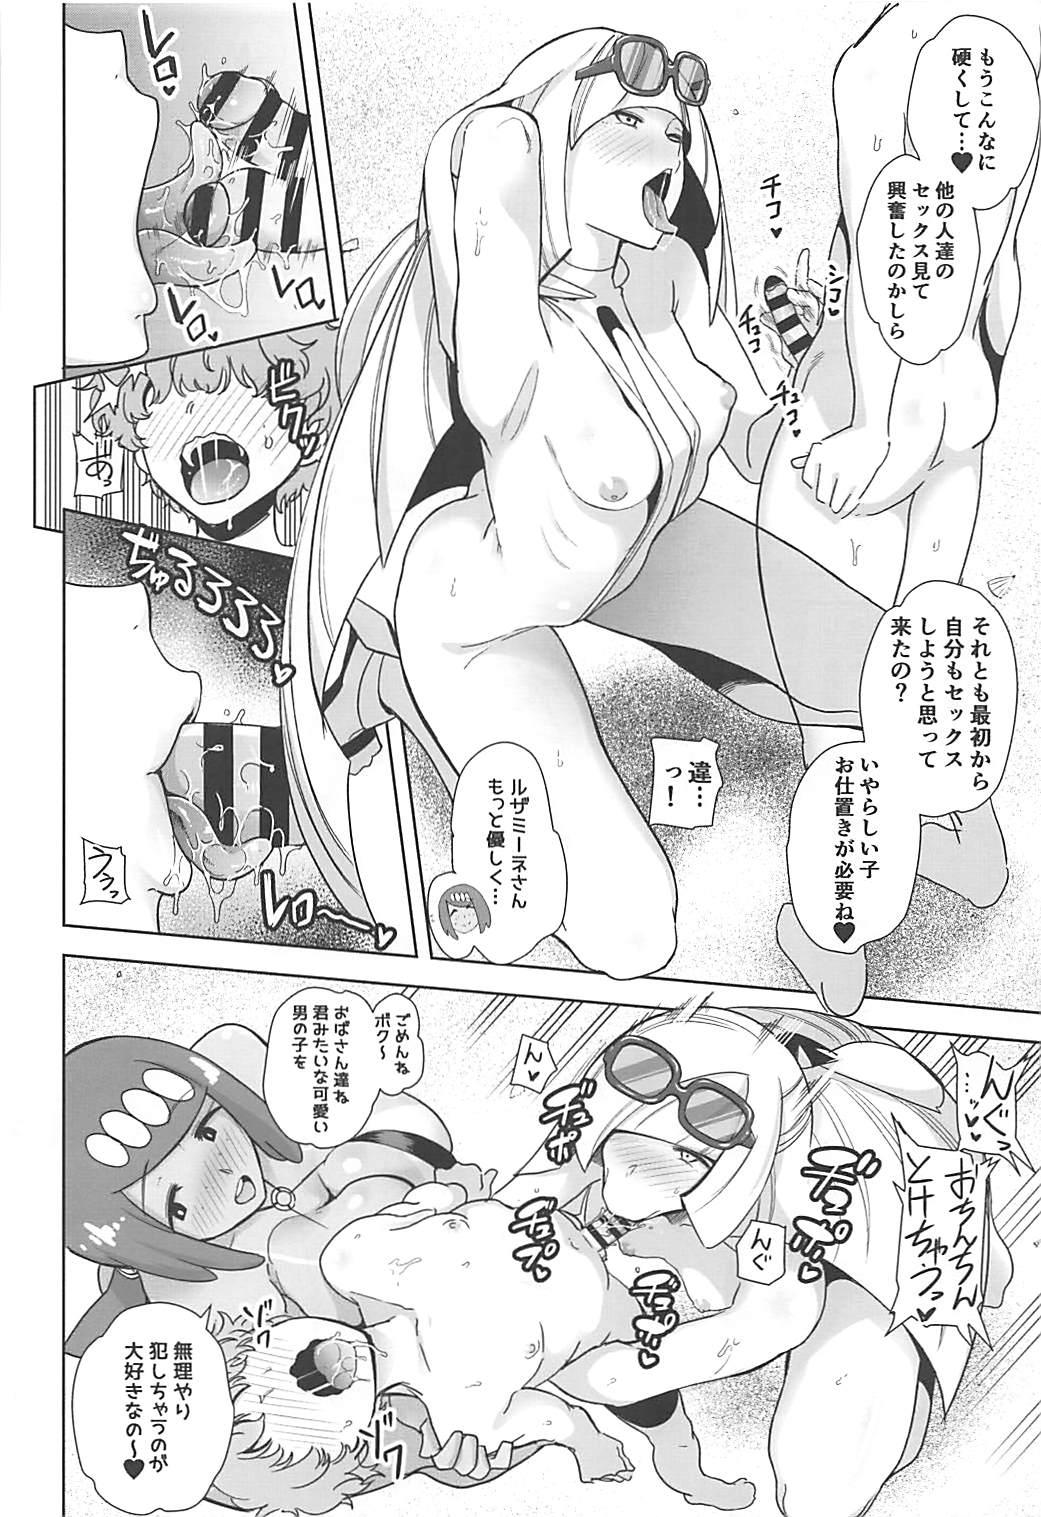 Pussy Eating Alola no Yoru no Sugata 3 - Pokemon Wrestling - Page 5